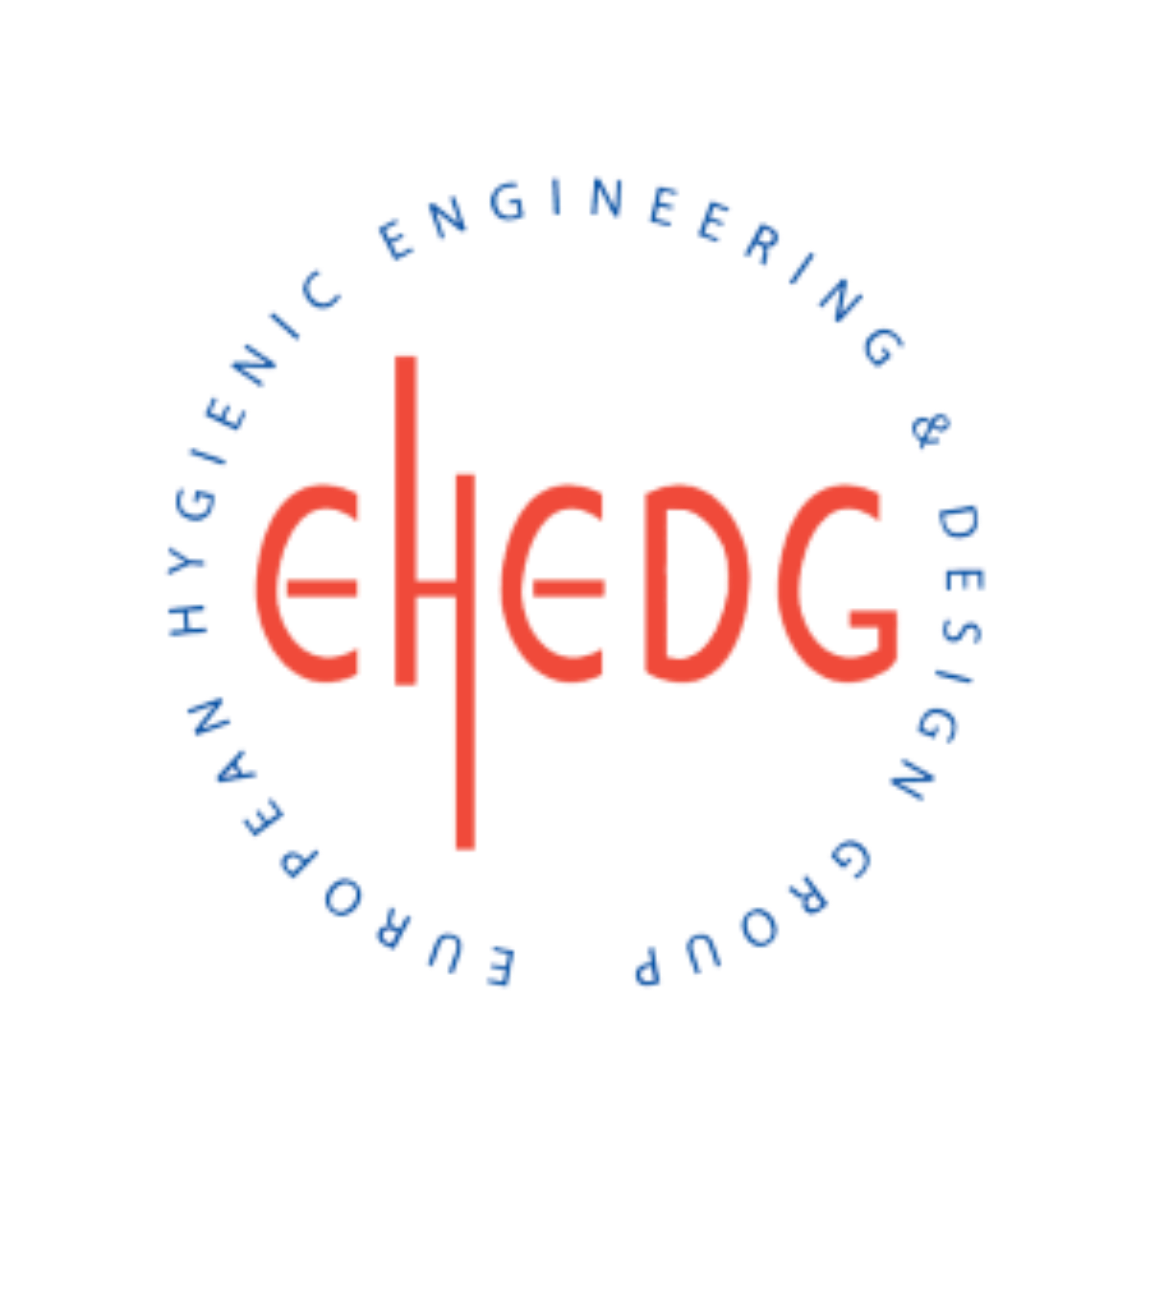 European Hygienic Engineering Design Group (EHEDG) logo on transparent background